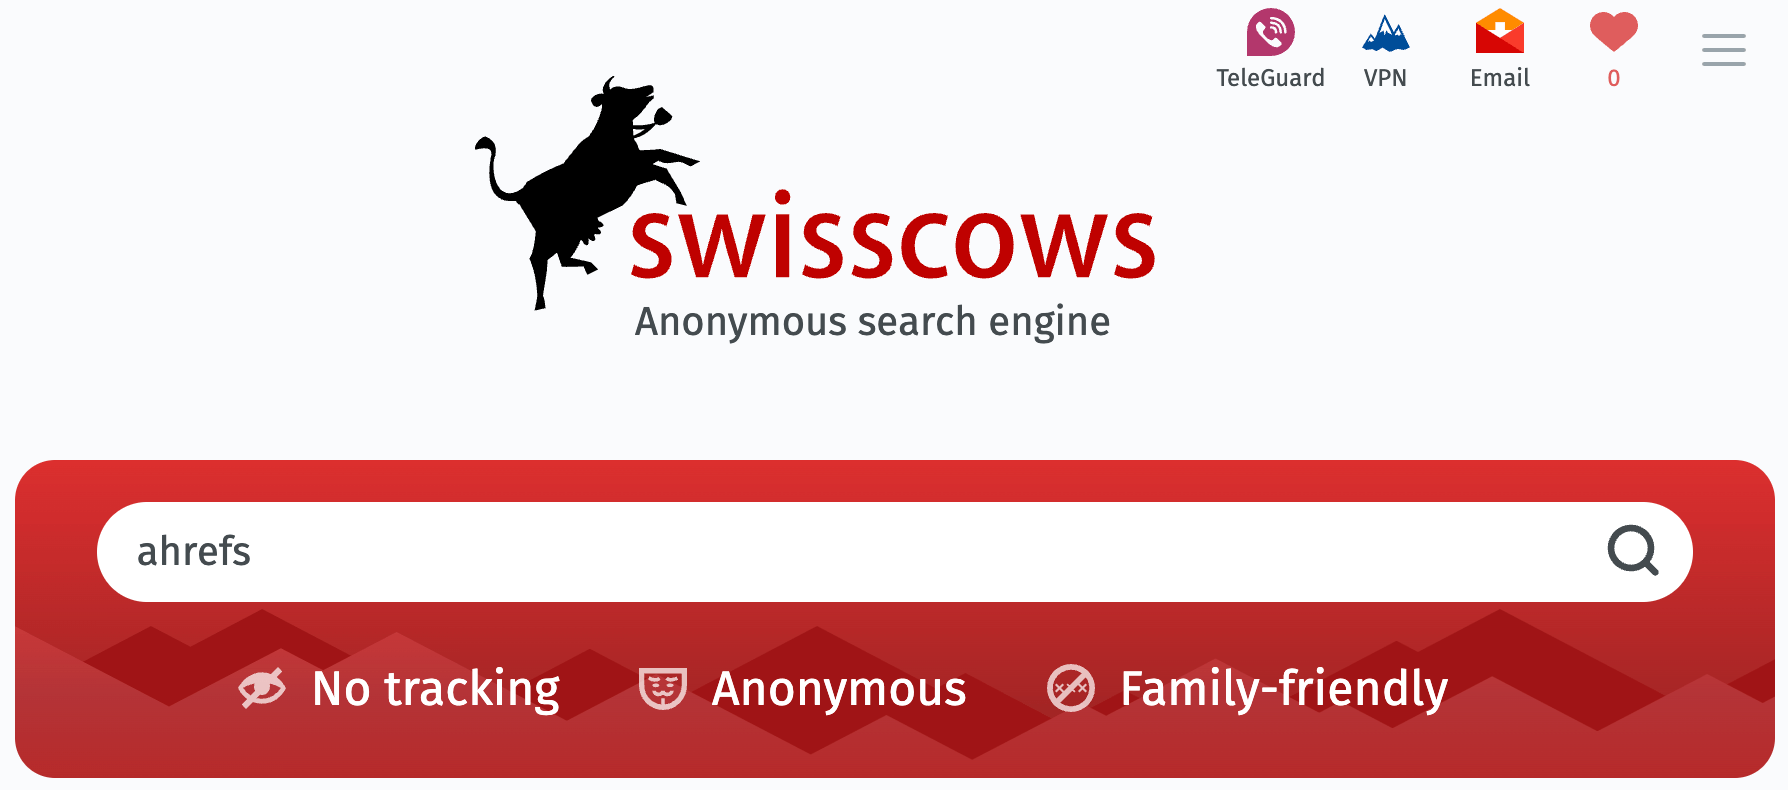 Buscando "ahrefs" en Swisscows